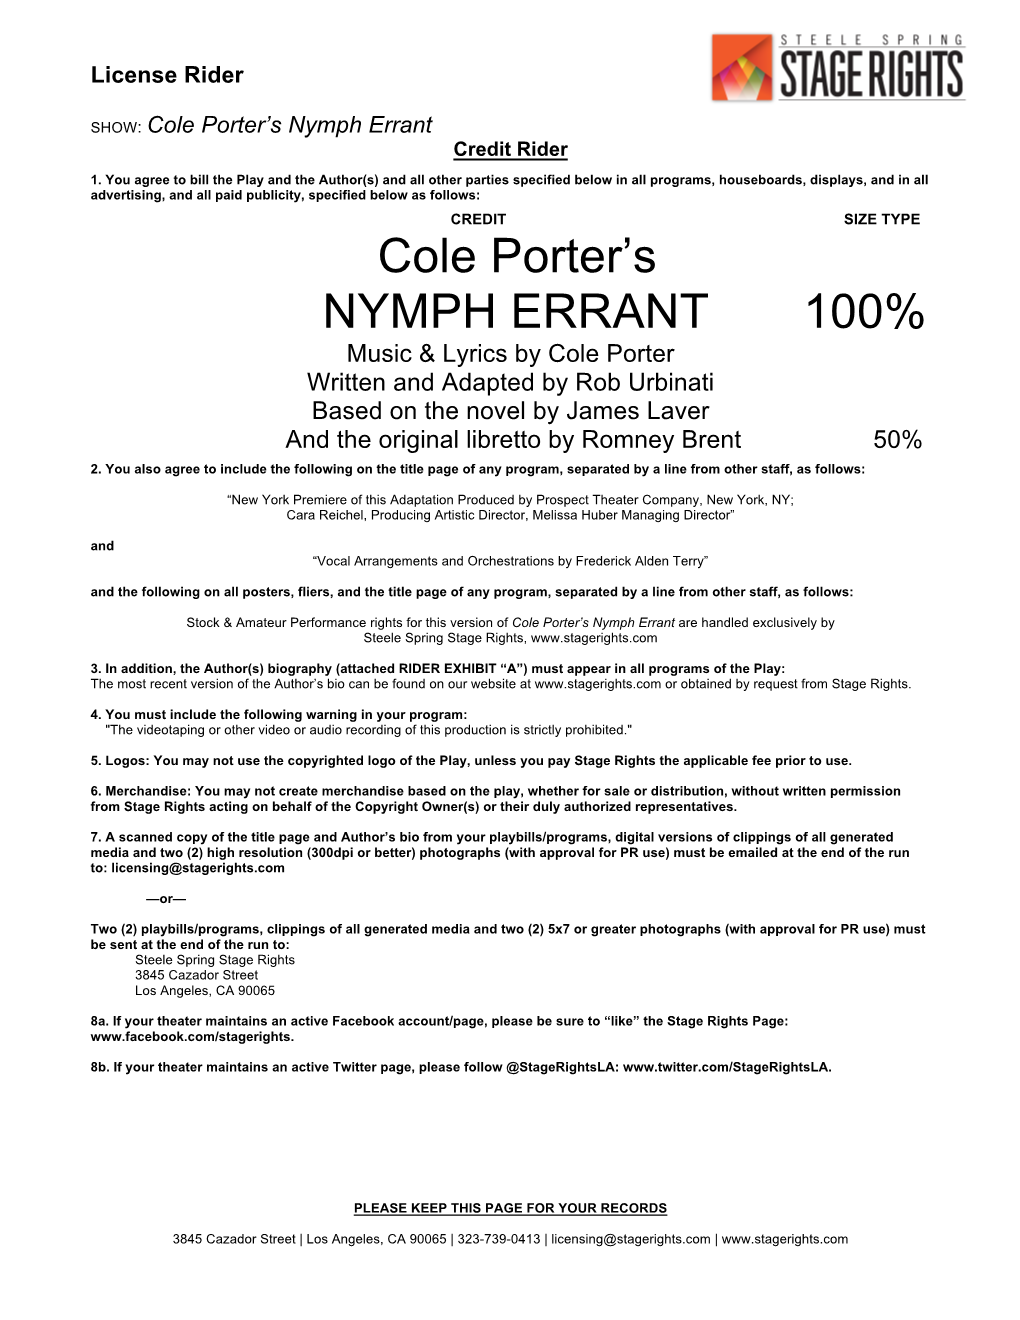 Cole Porter's NYMPH ERRANT 100%